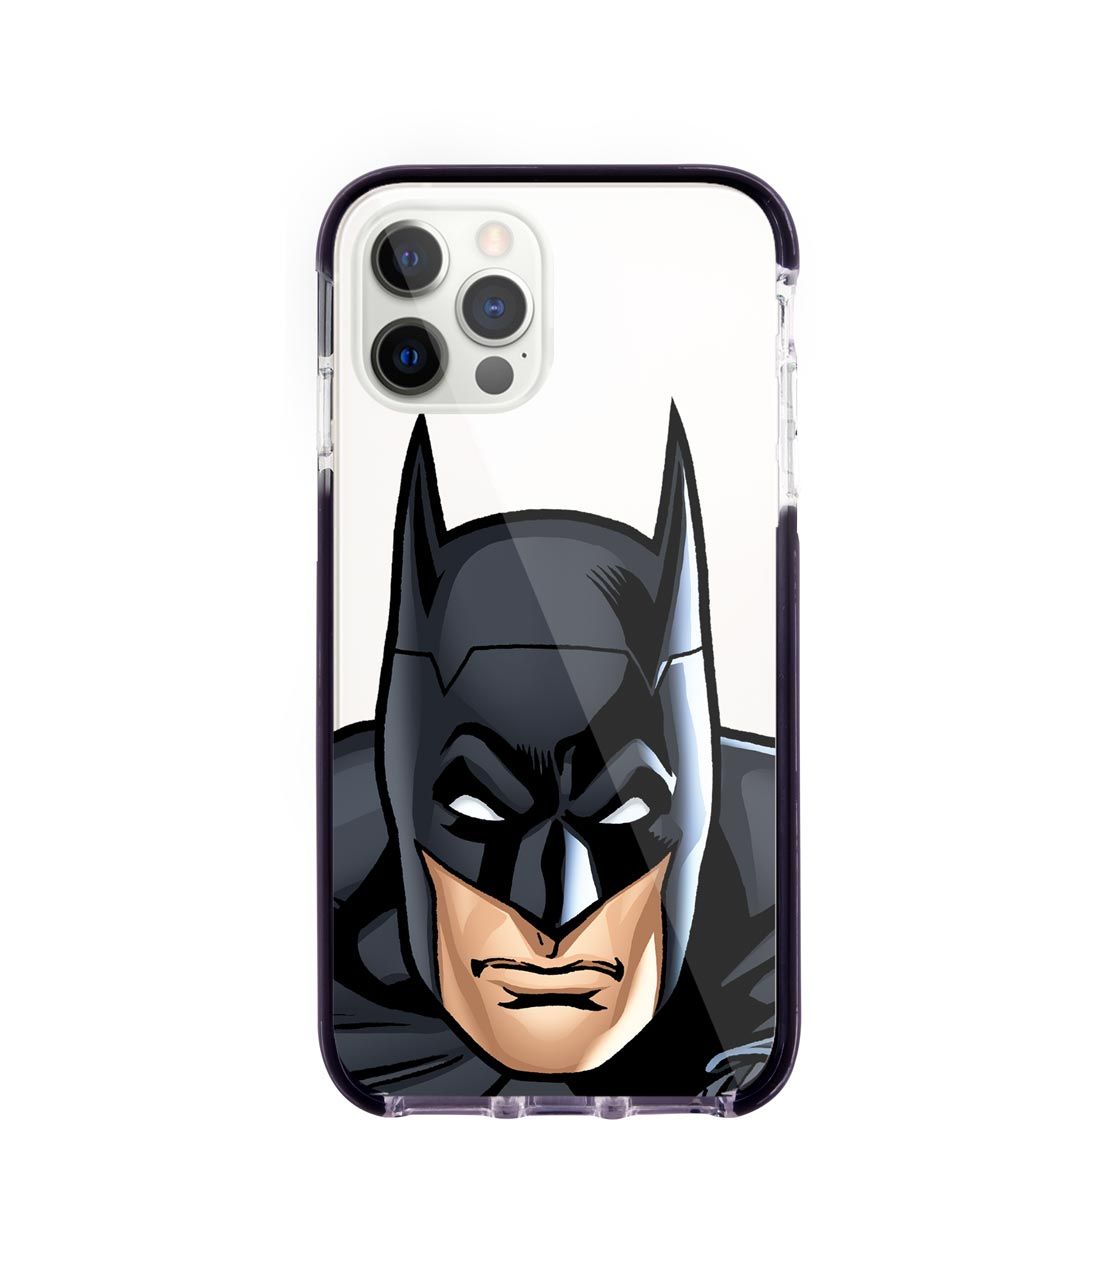 Fierce Batman - Extreme Case for iPhone 12 Pro Max